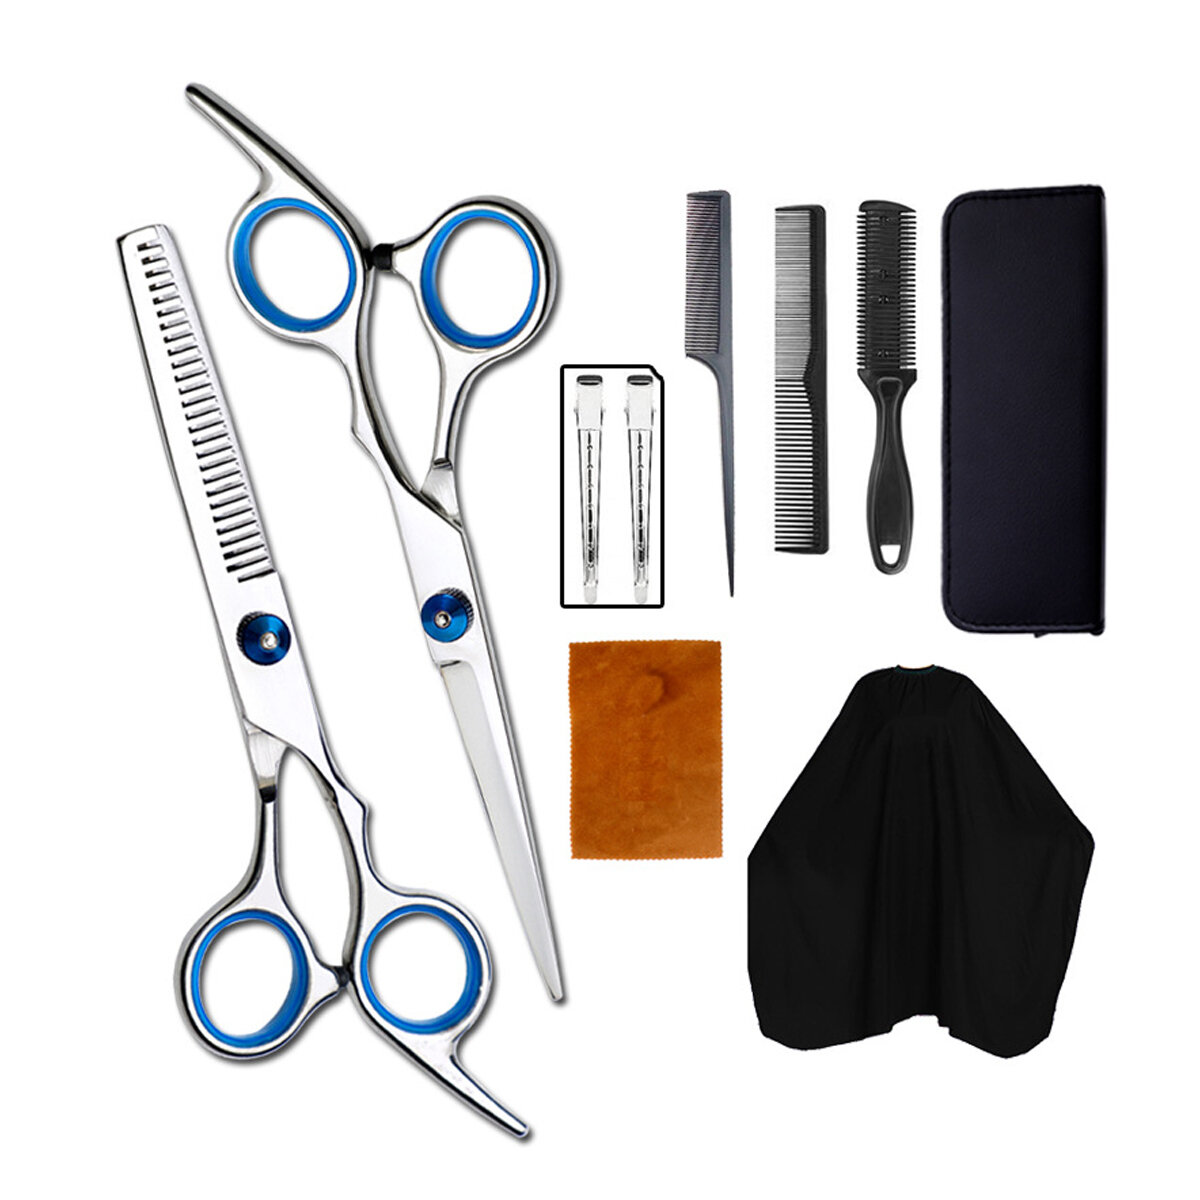 

10pcs Hair Cutting Scissors Thinning Shears Comb Clips Cape Hair Trimmer